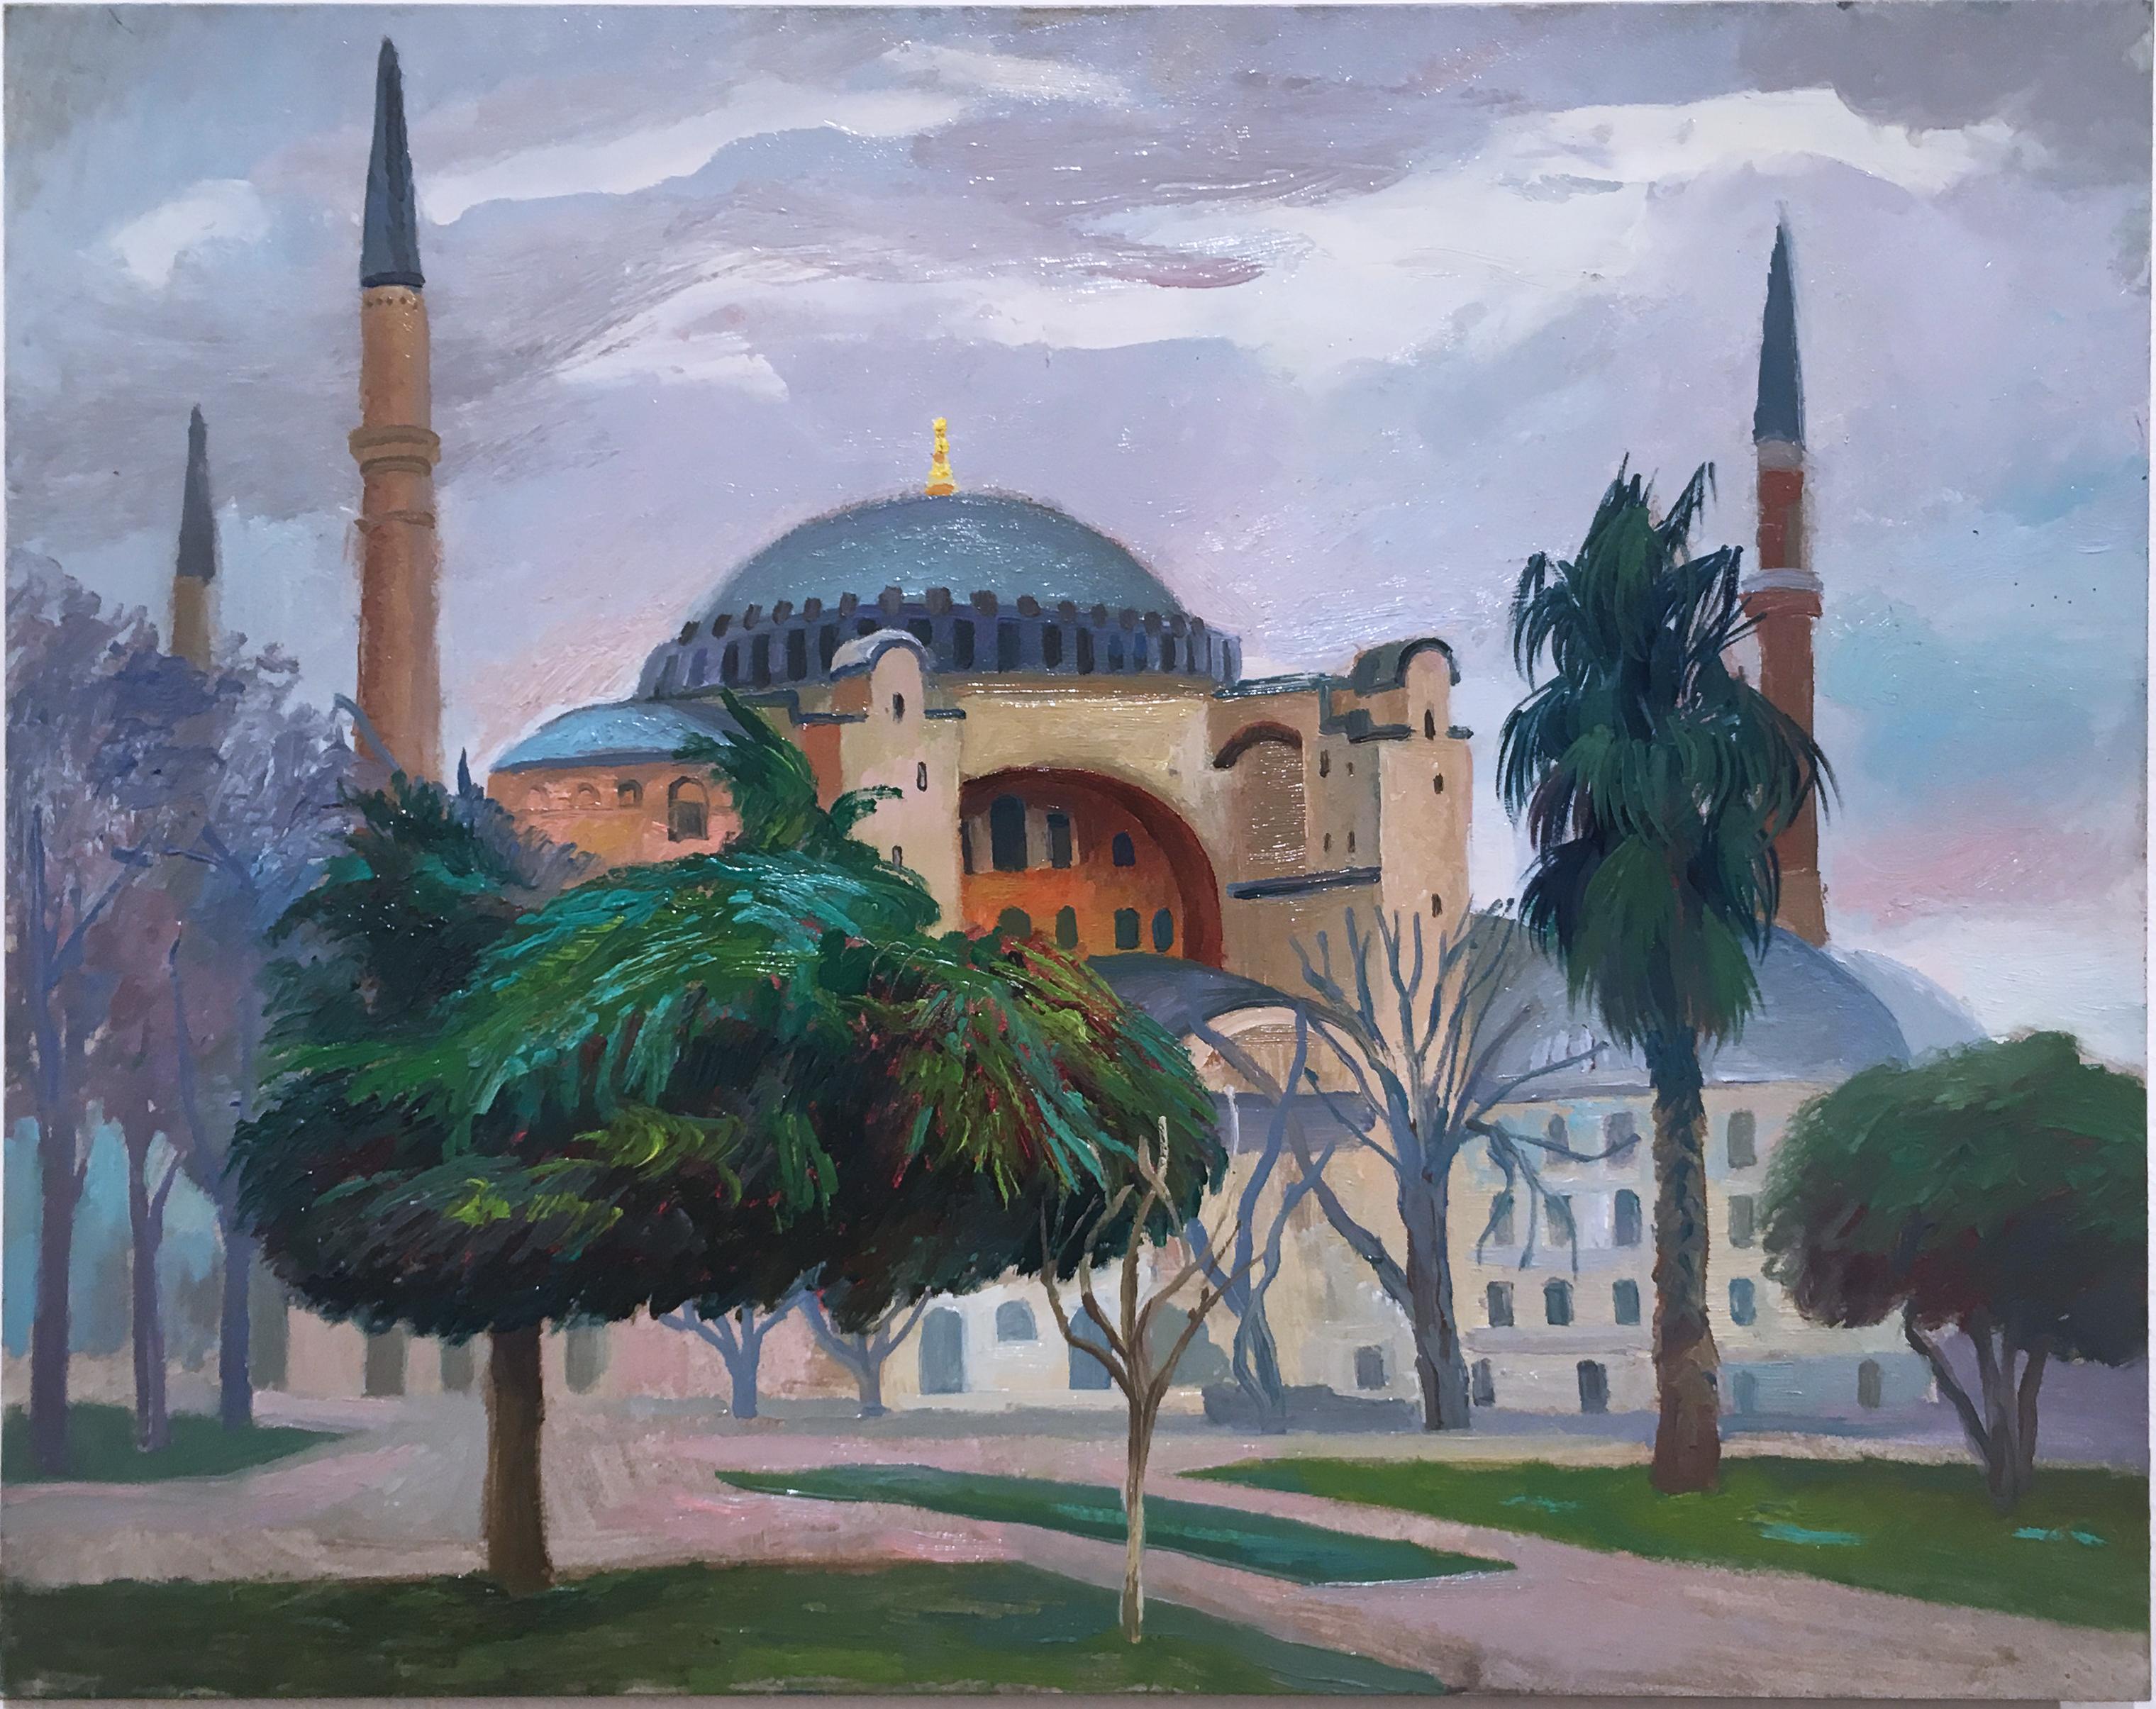 Thomas John Carlson Figurative Painting - Istanbul Hagia Sophia, plein air figurative, landscape, oil on panel, 2014